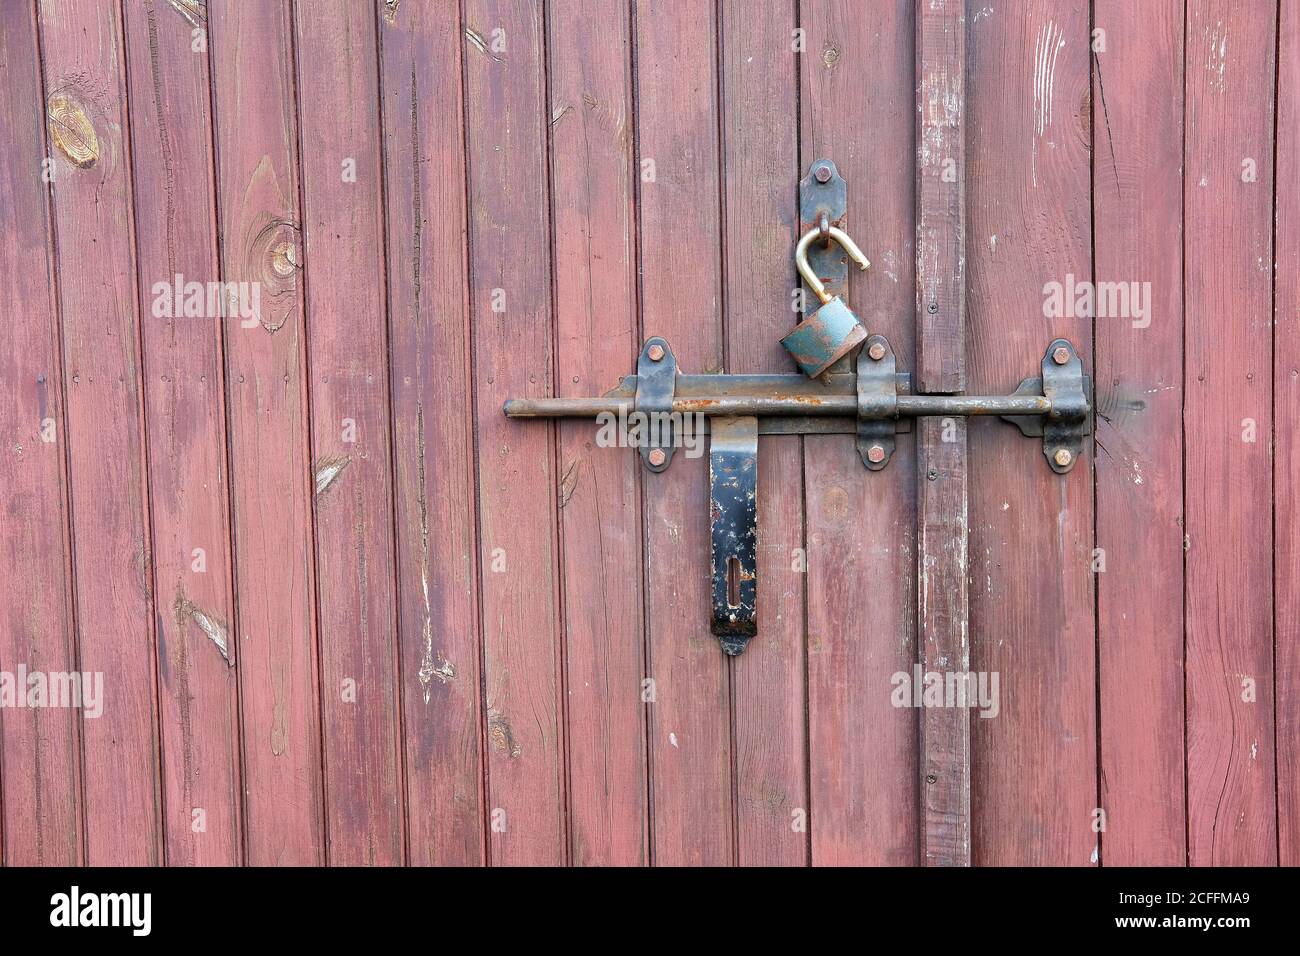 Porte de garage rétro en bois avec cadenas et vieille moraillon en métal  Photo Stock - Alamy